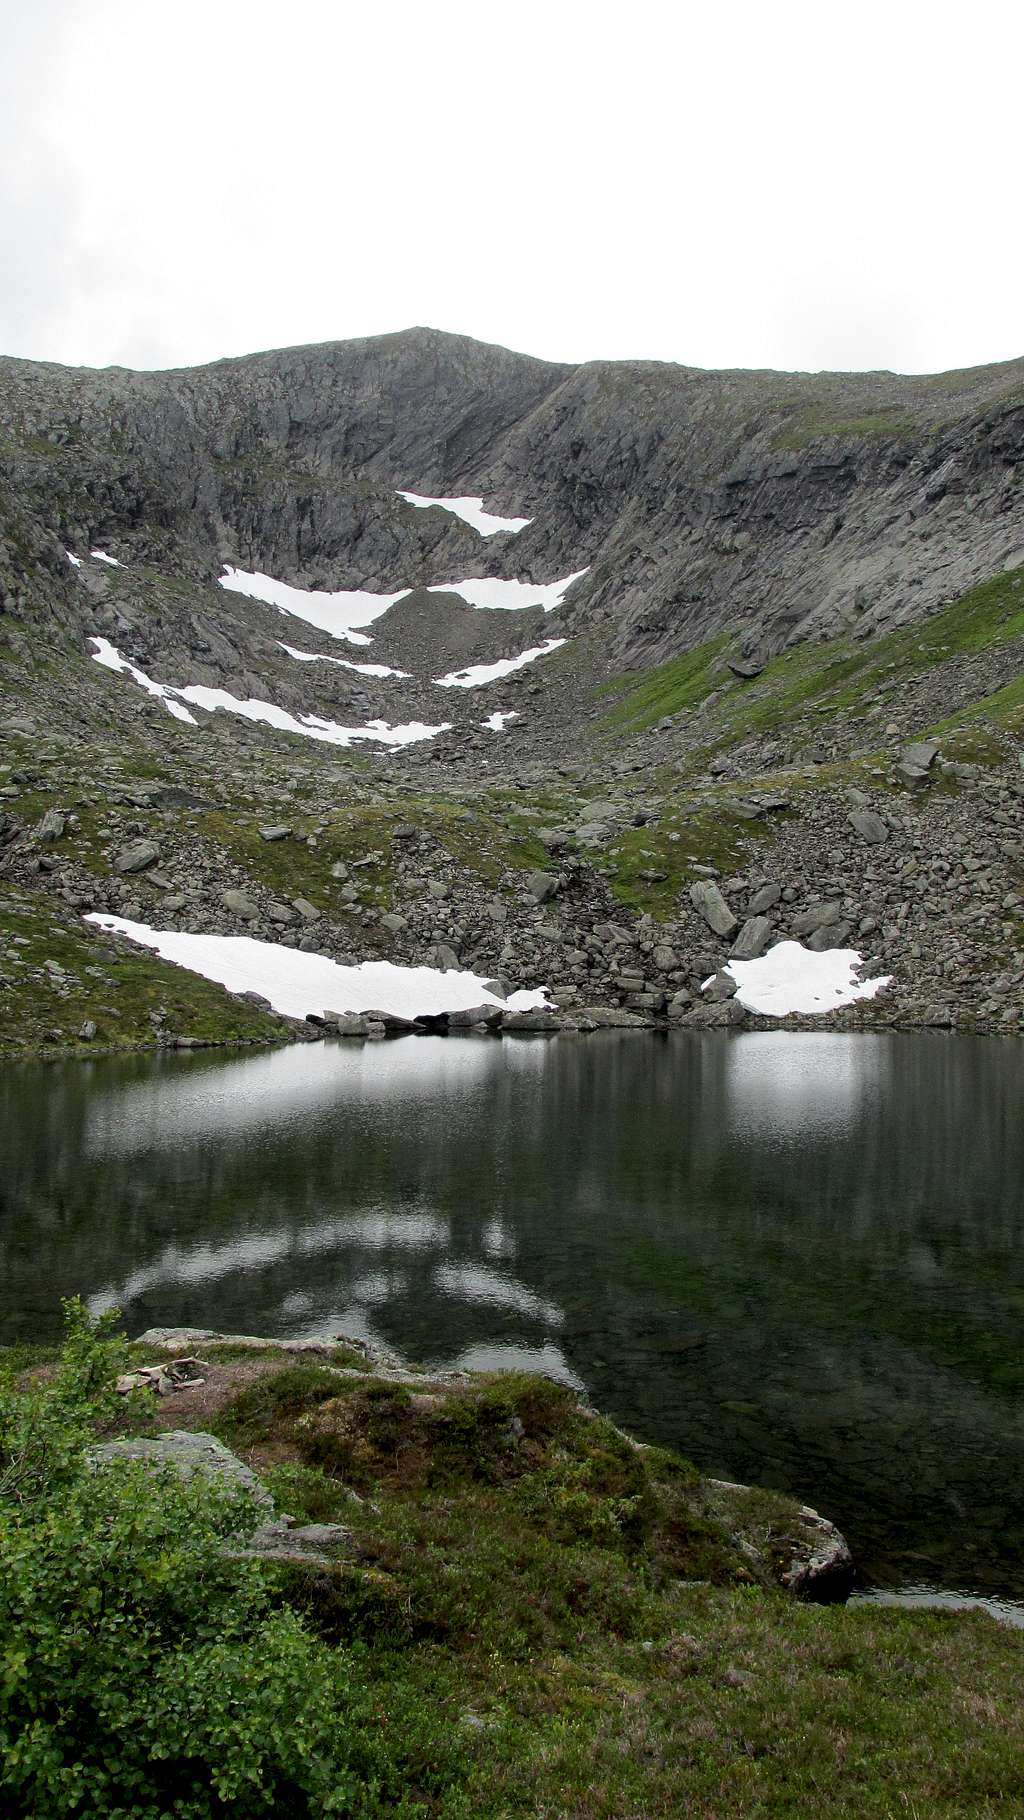 Mjolvafjellet rises behind this pituresque lake